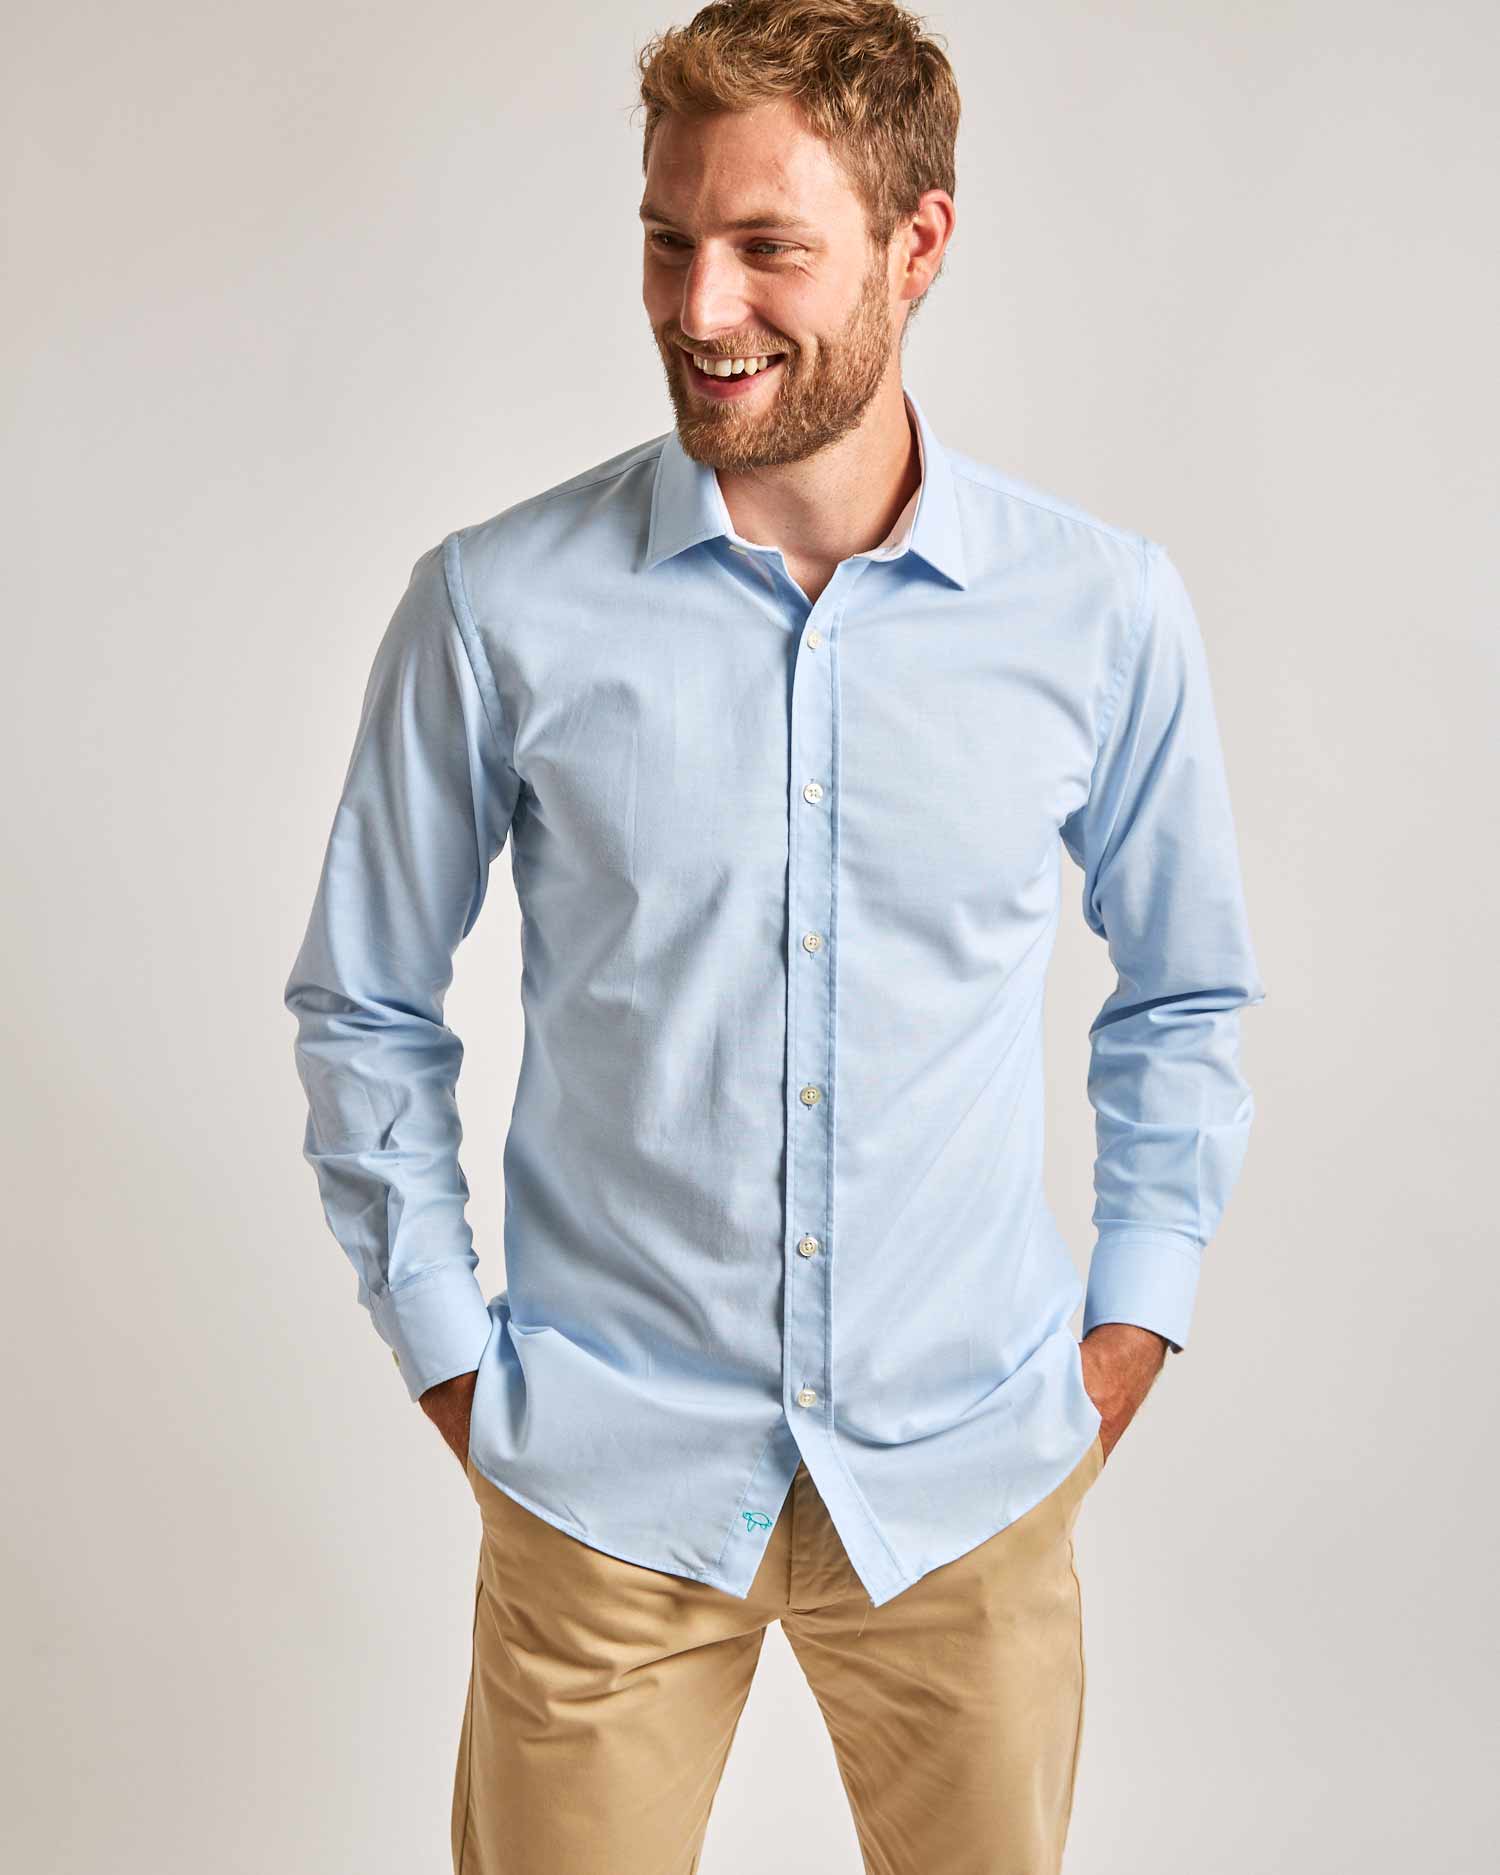 Blue Oxford Shirt - Traditional Collar Shirts